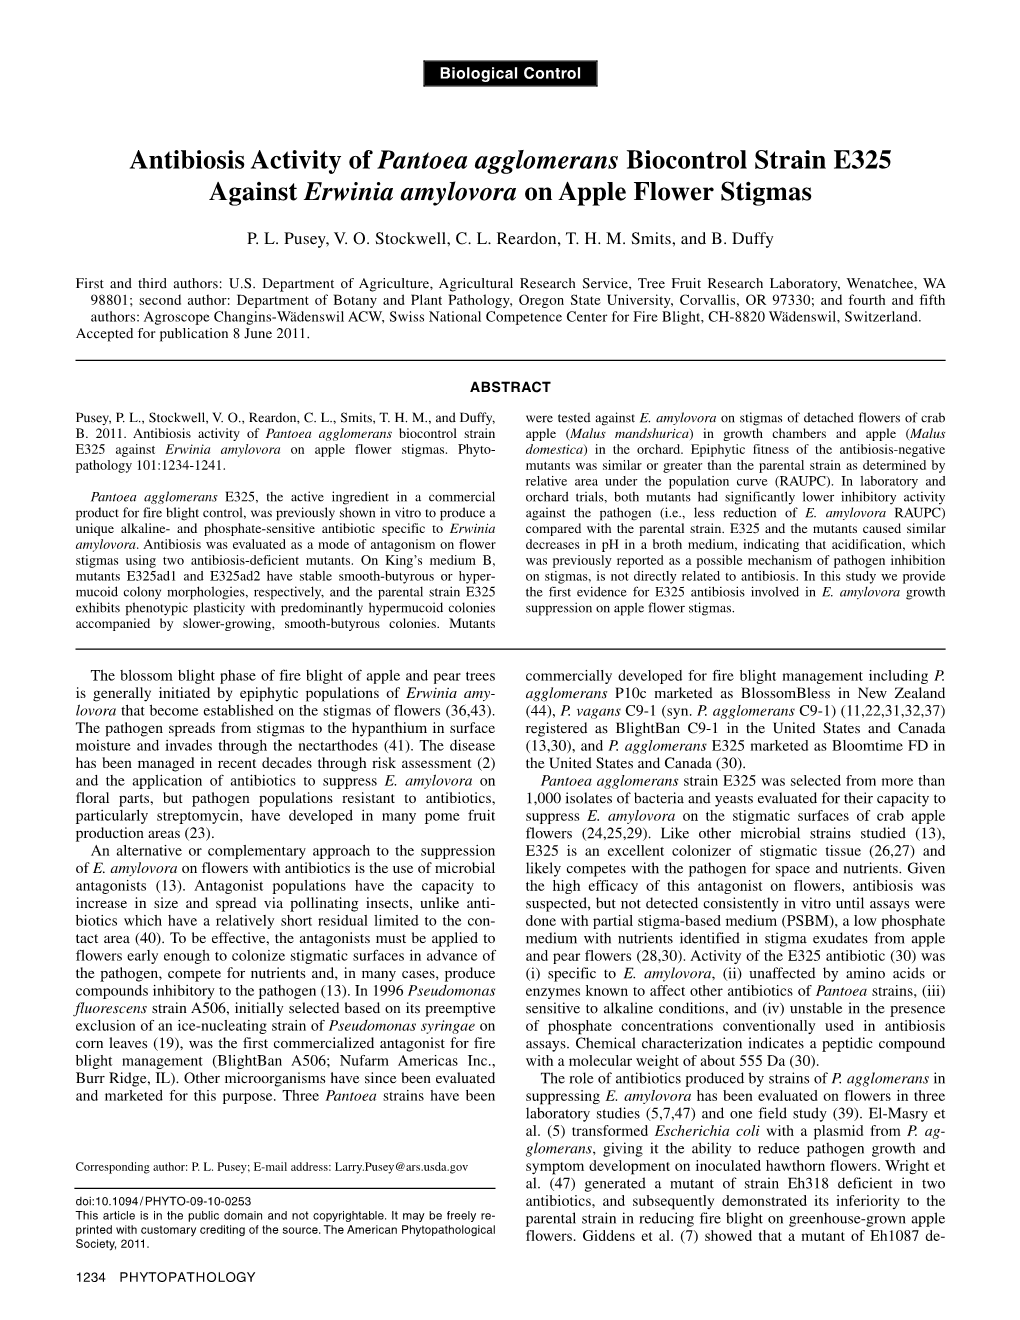 Antibiosis Activity of Pantoea Agglomerans Biocontrol Strain E325 Against Erwinia Amylovora on Apple Flower Stigmas